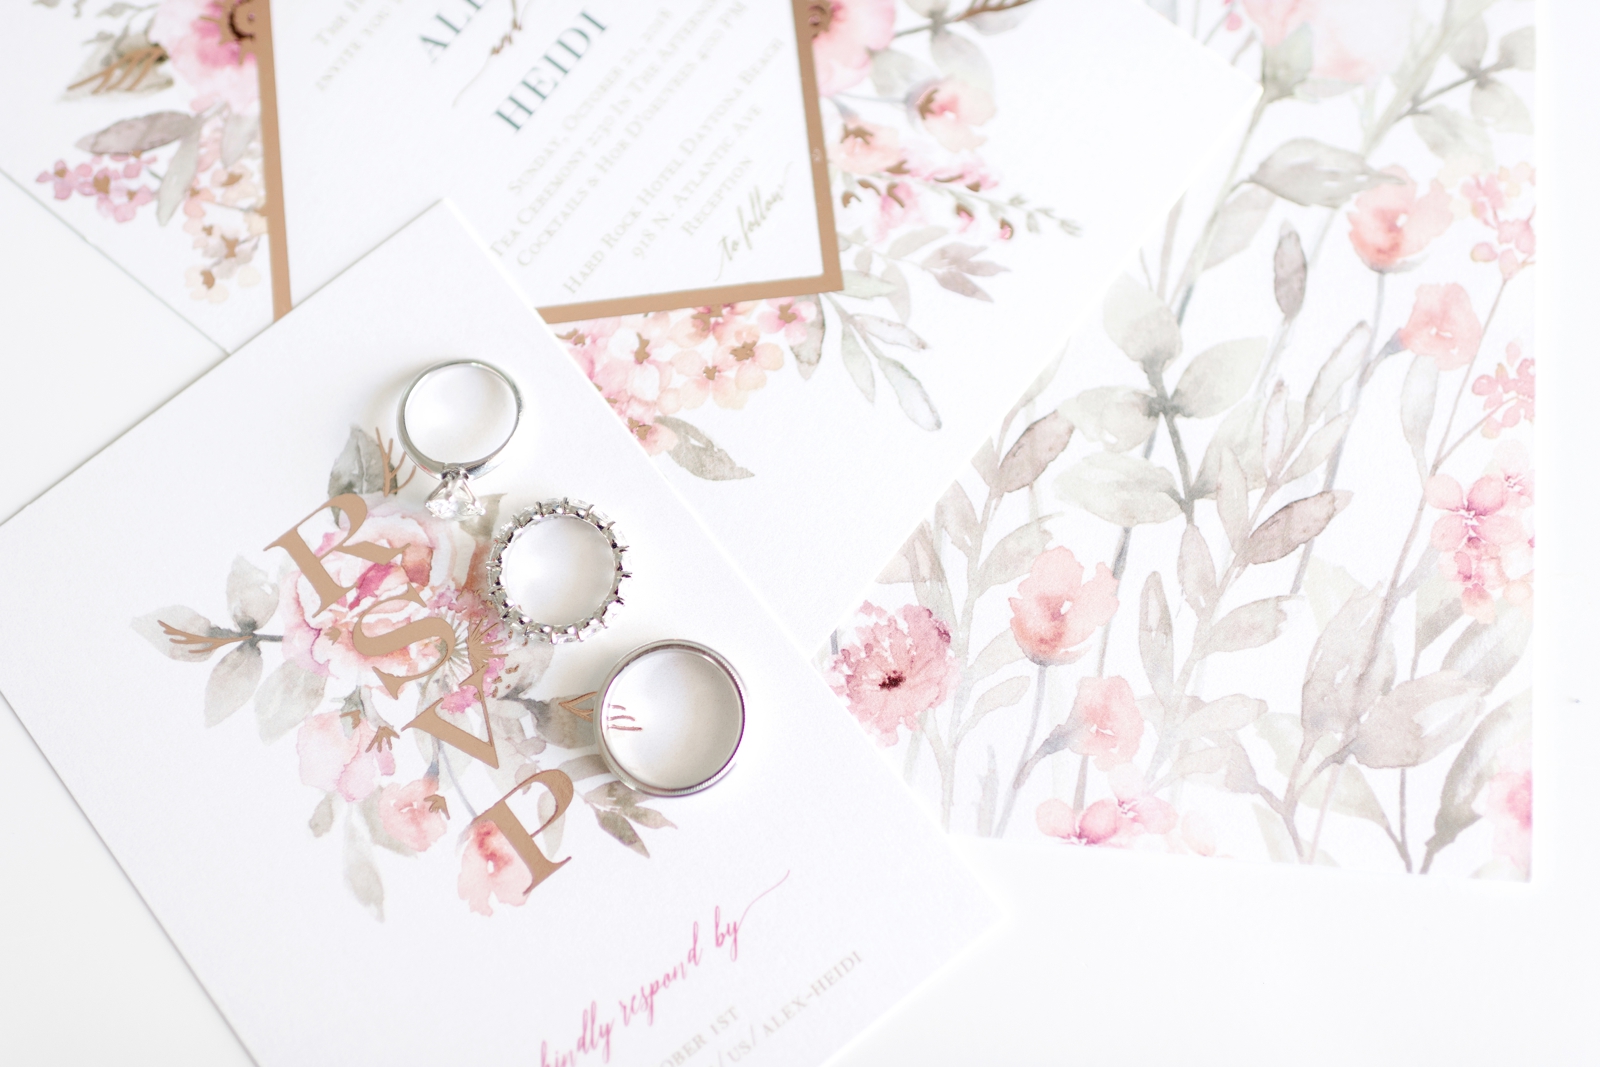 rose gold wedding invitations